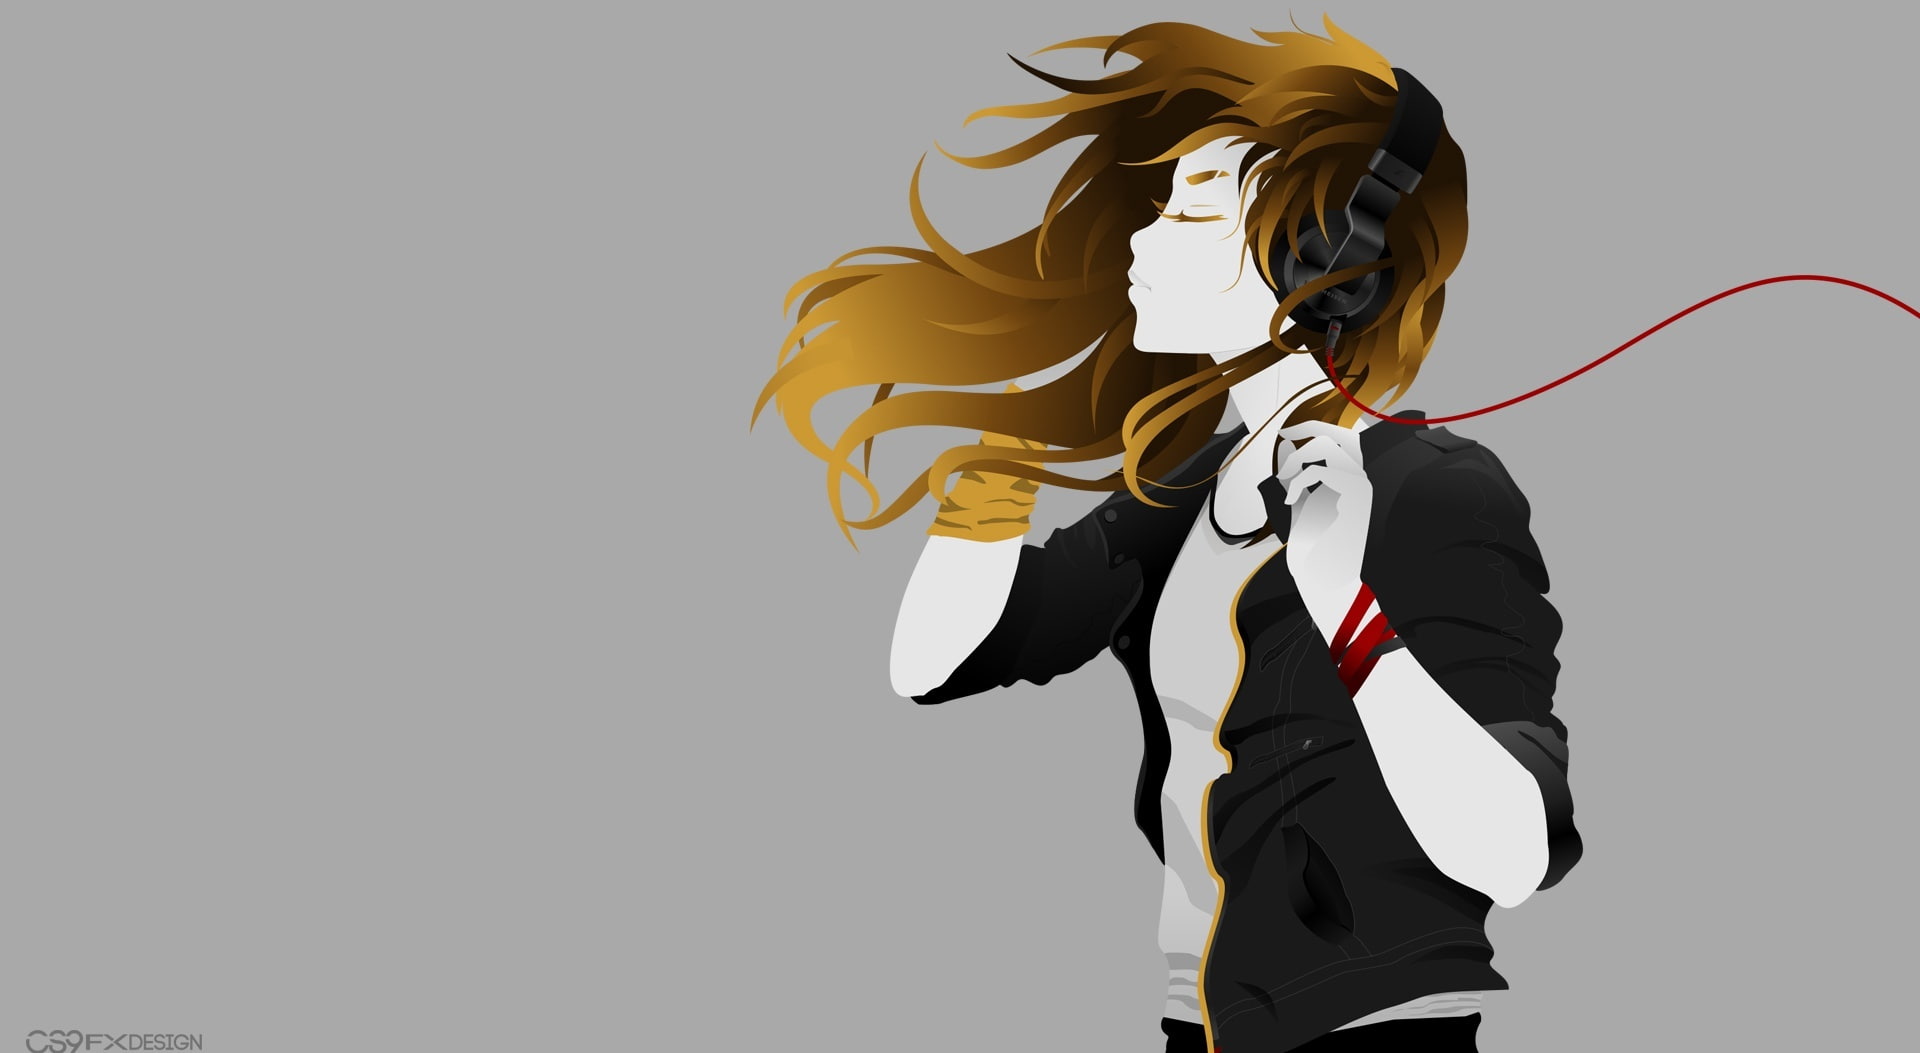 Girl with Headphone - by CS9 Fx Design, woman wearing headphones clip art